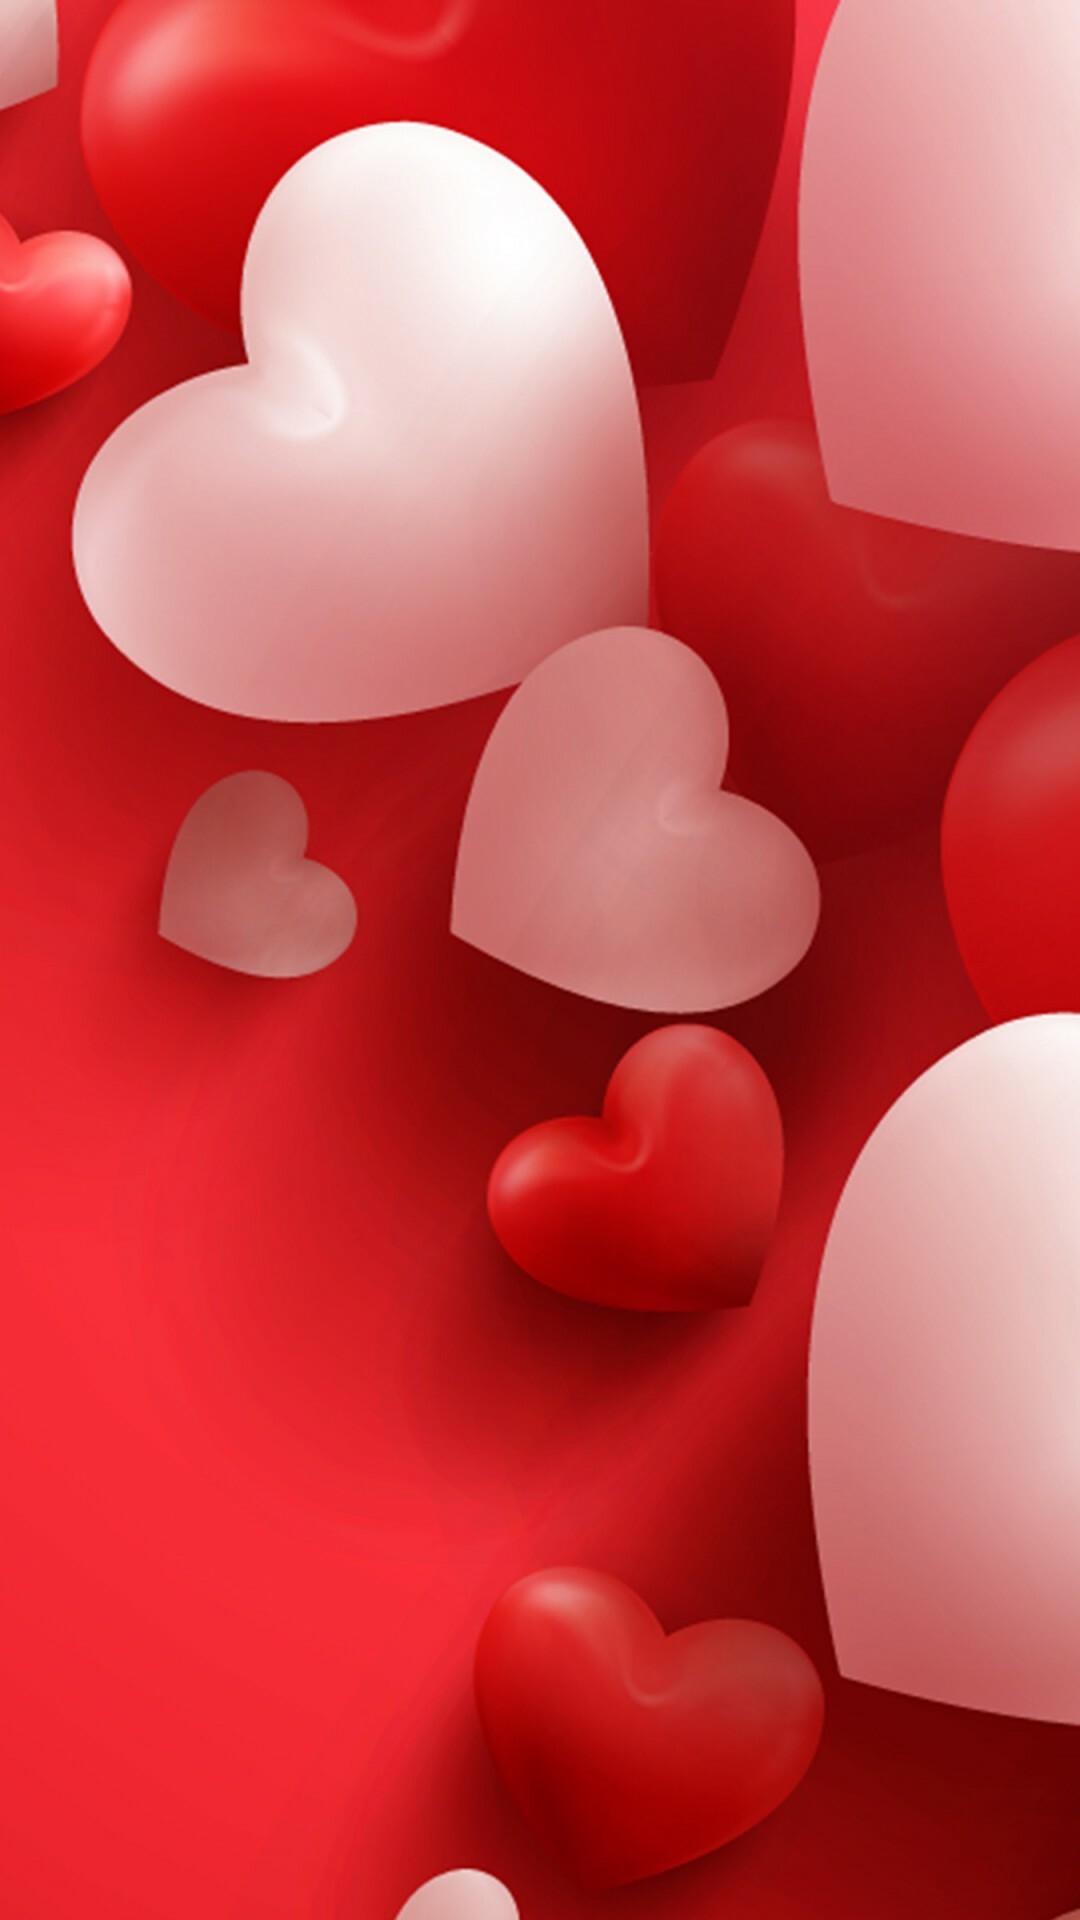 Heart: Valentine's Day, Love symbol, Holiday. 1080x1920 Full HD Wallpaper.